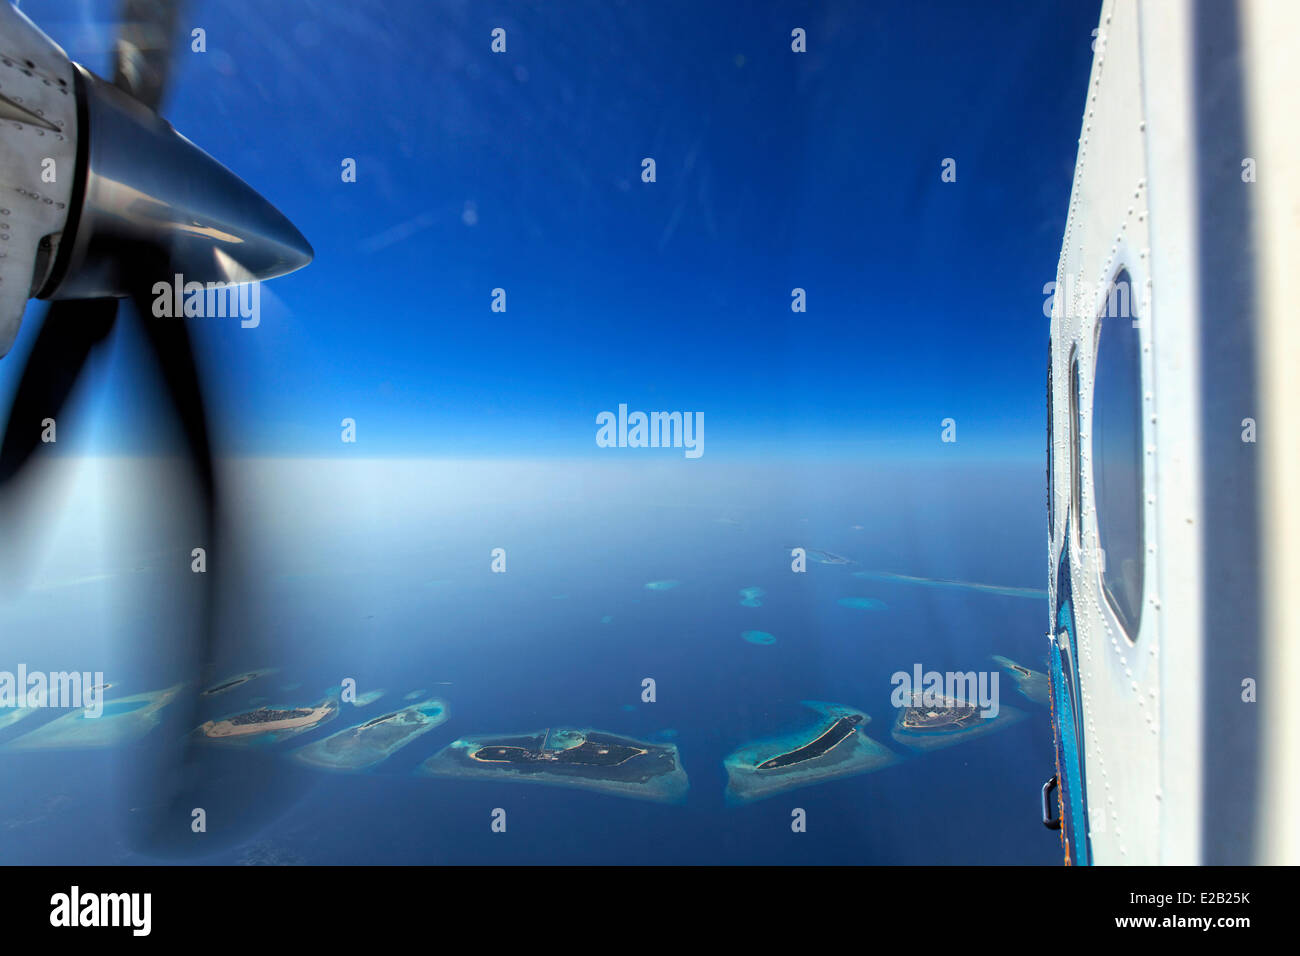 Maldives, atoll (aerial view) Stock Photo